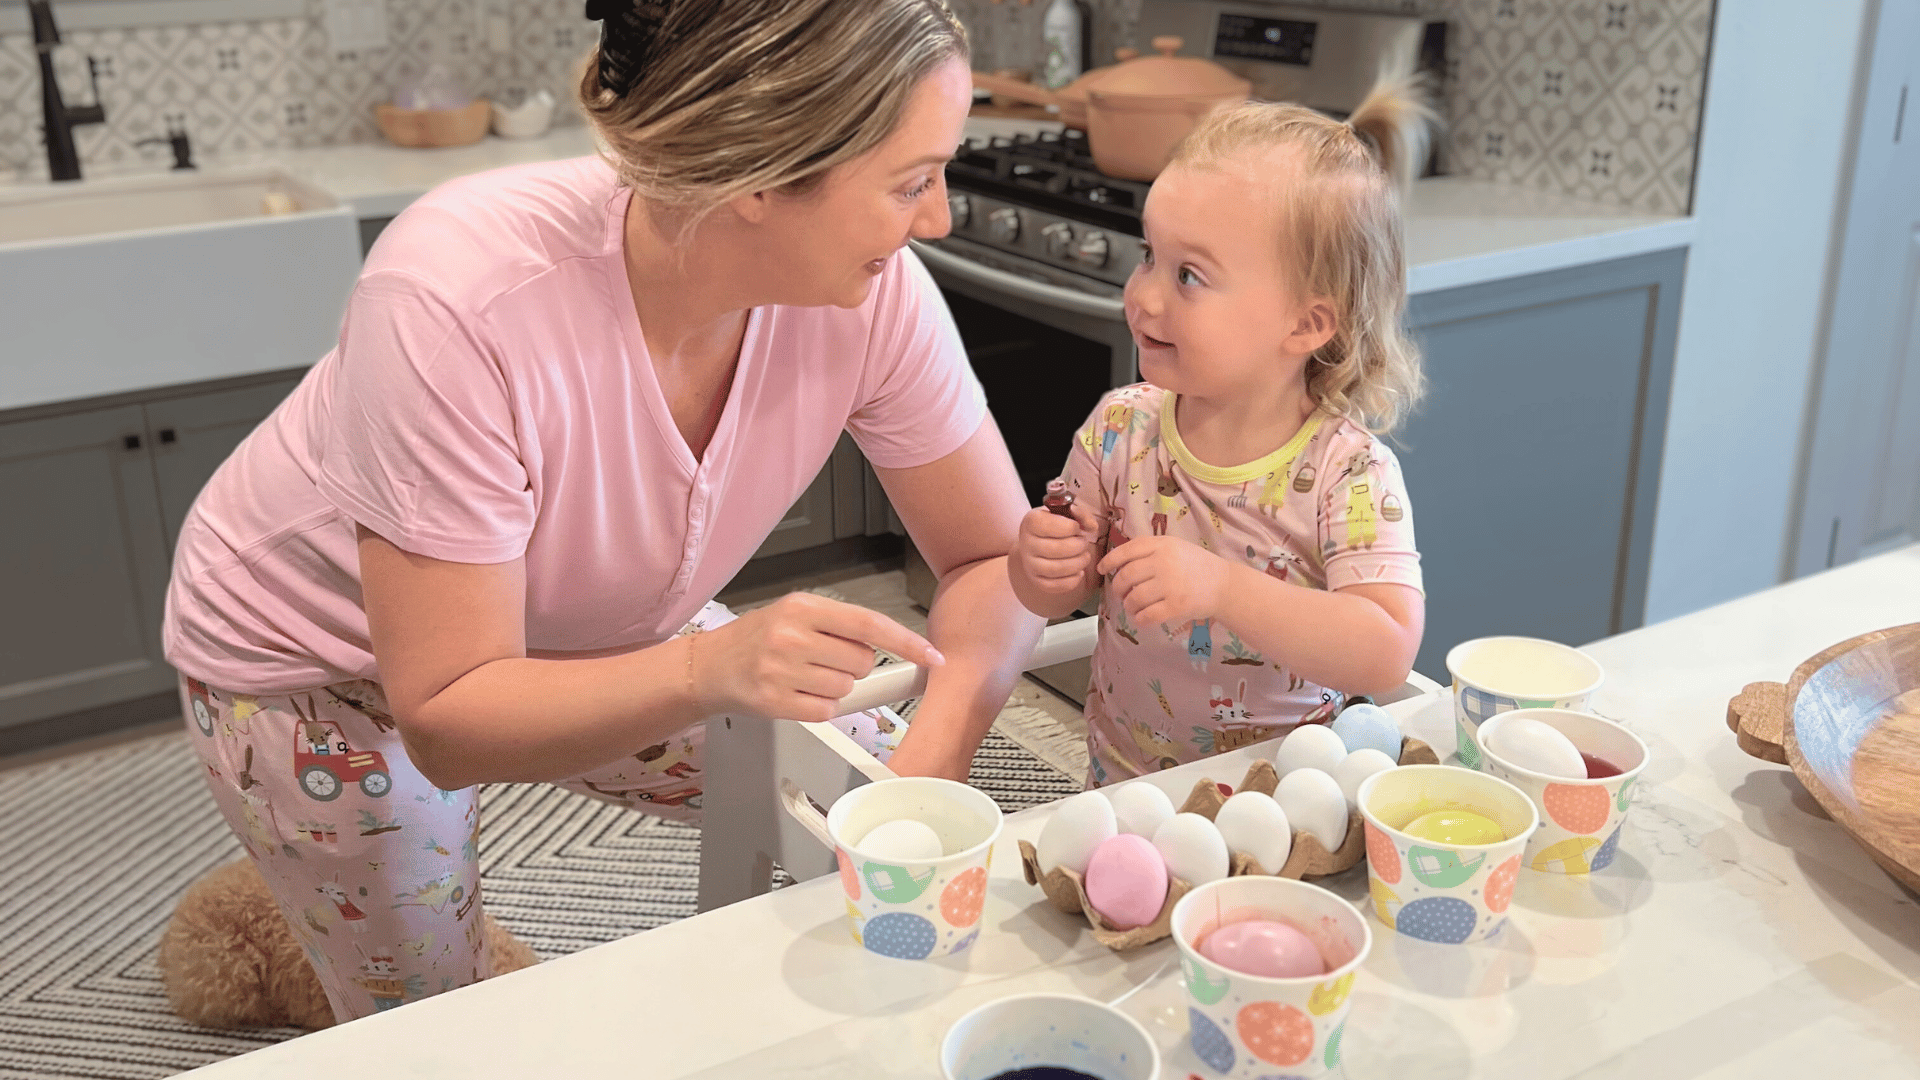 Easter Egg Decorating Ideas for Kids